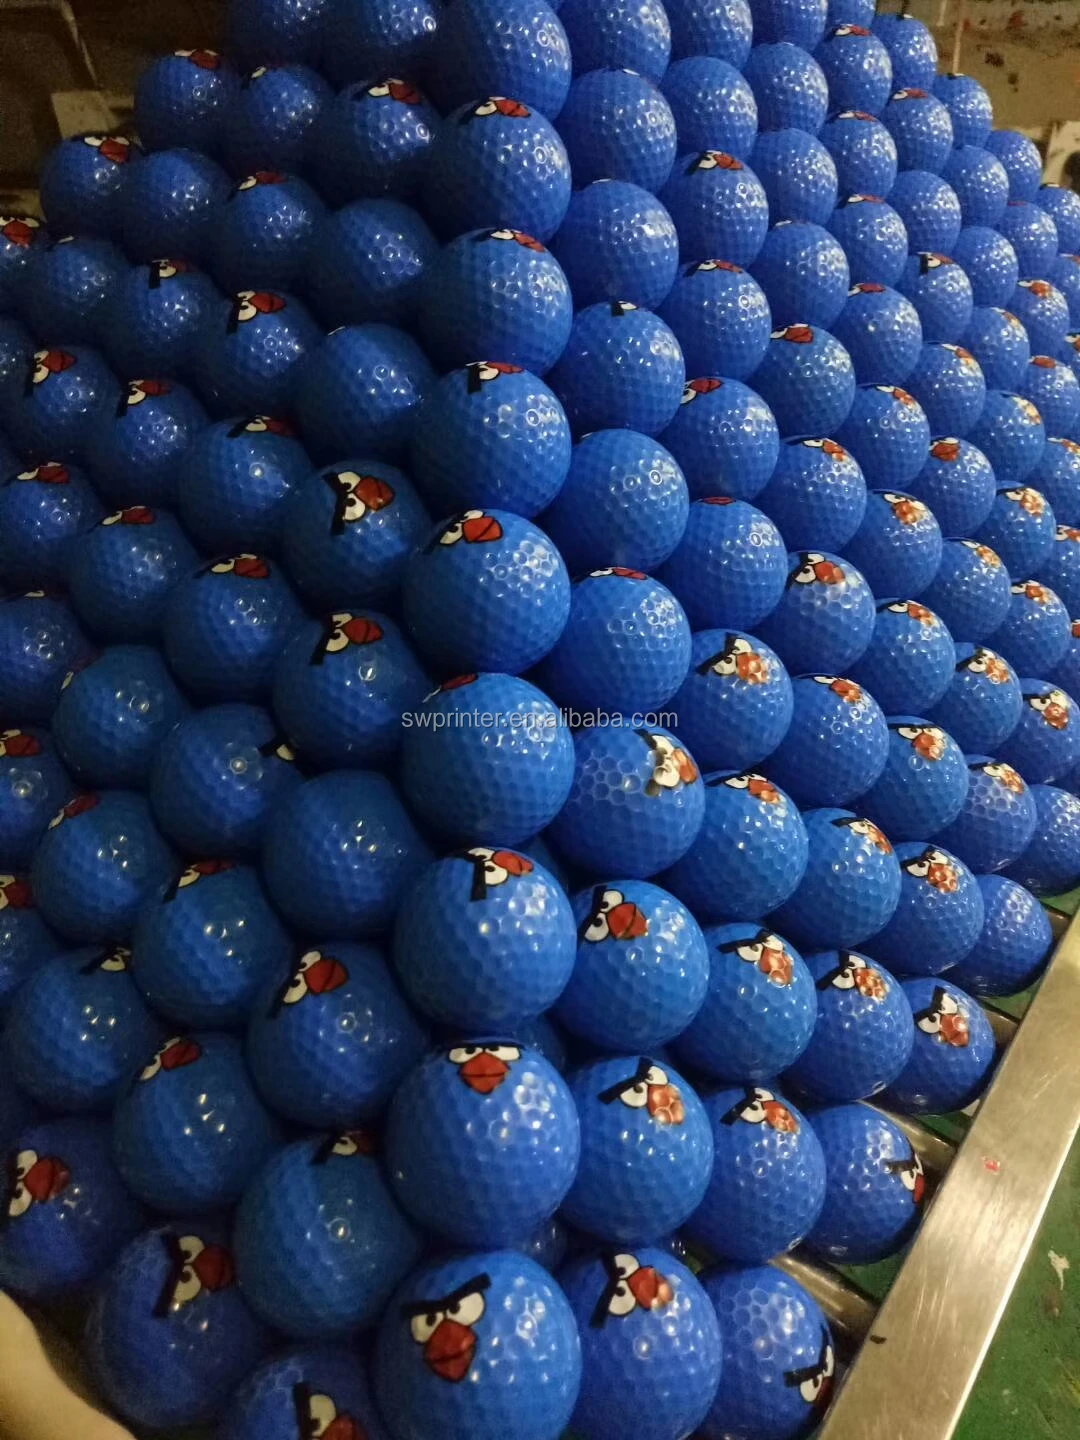 Golf ball pad printing machine pad printer 6 color balls printing equipment